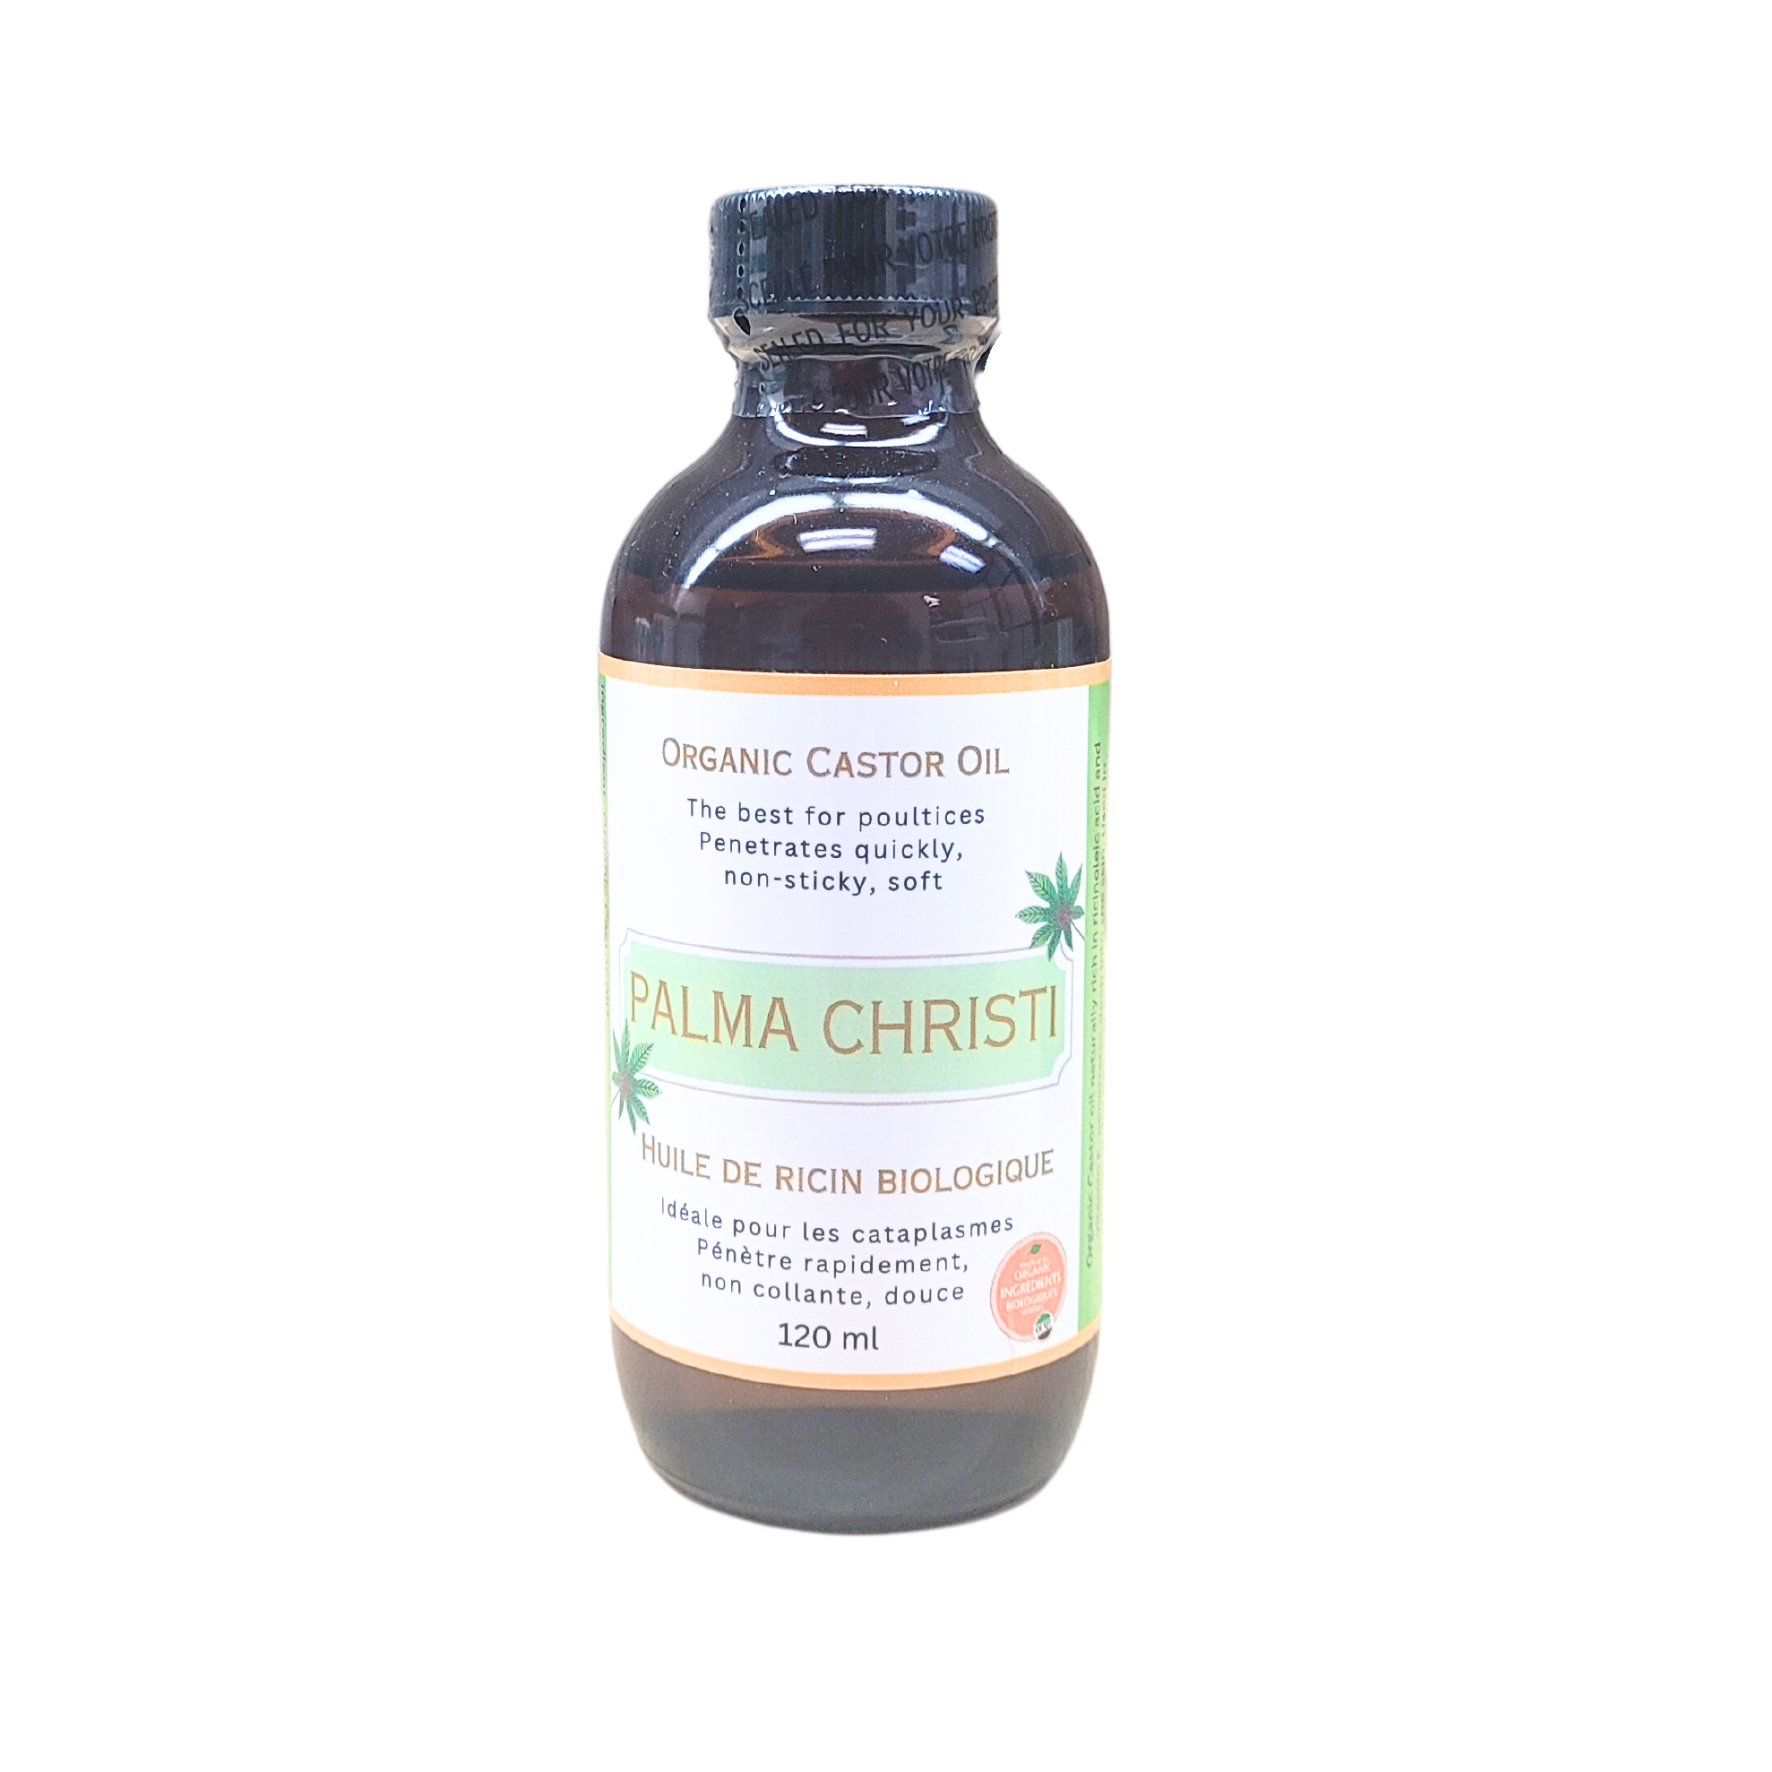 Palma christi - organic castor oil  (formrly  gold)